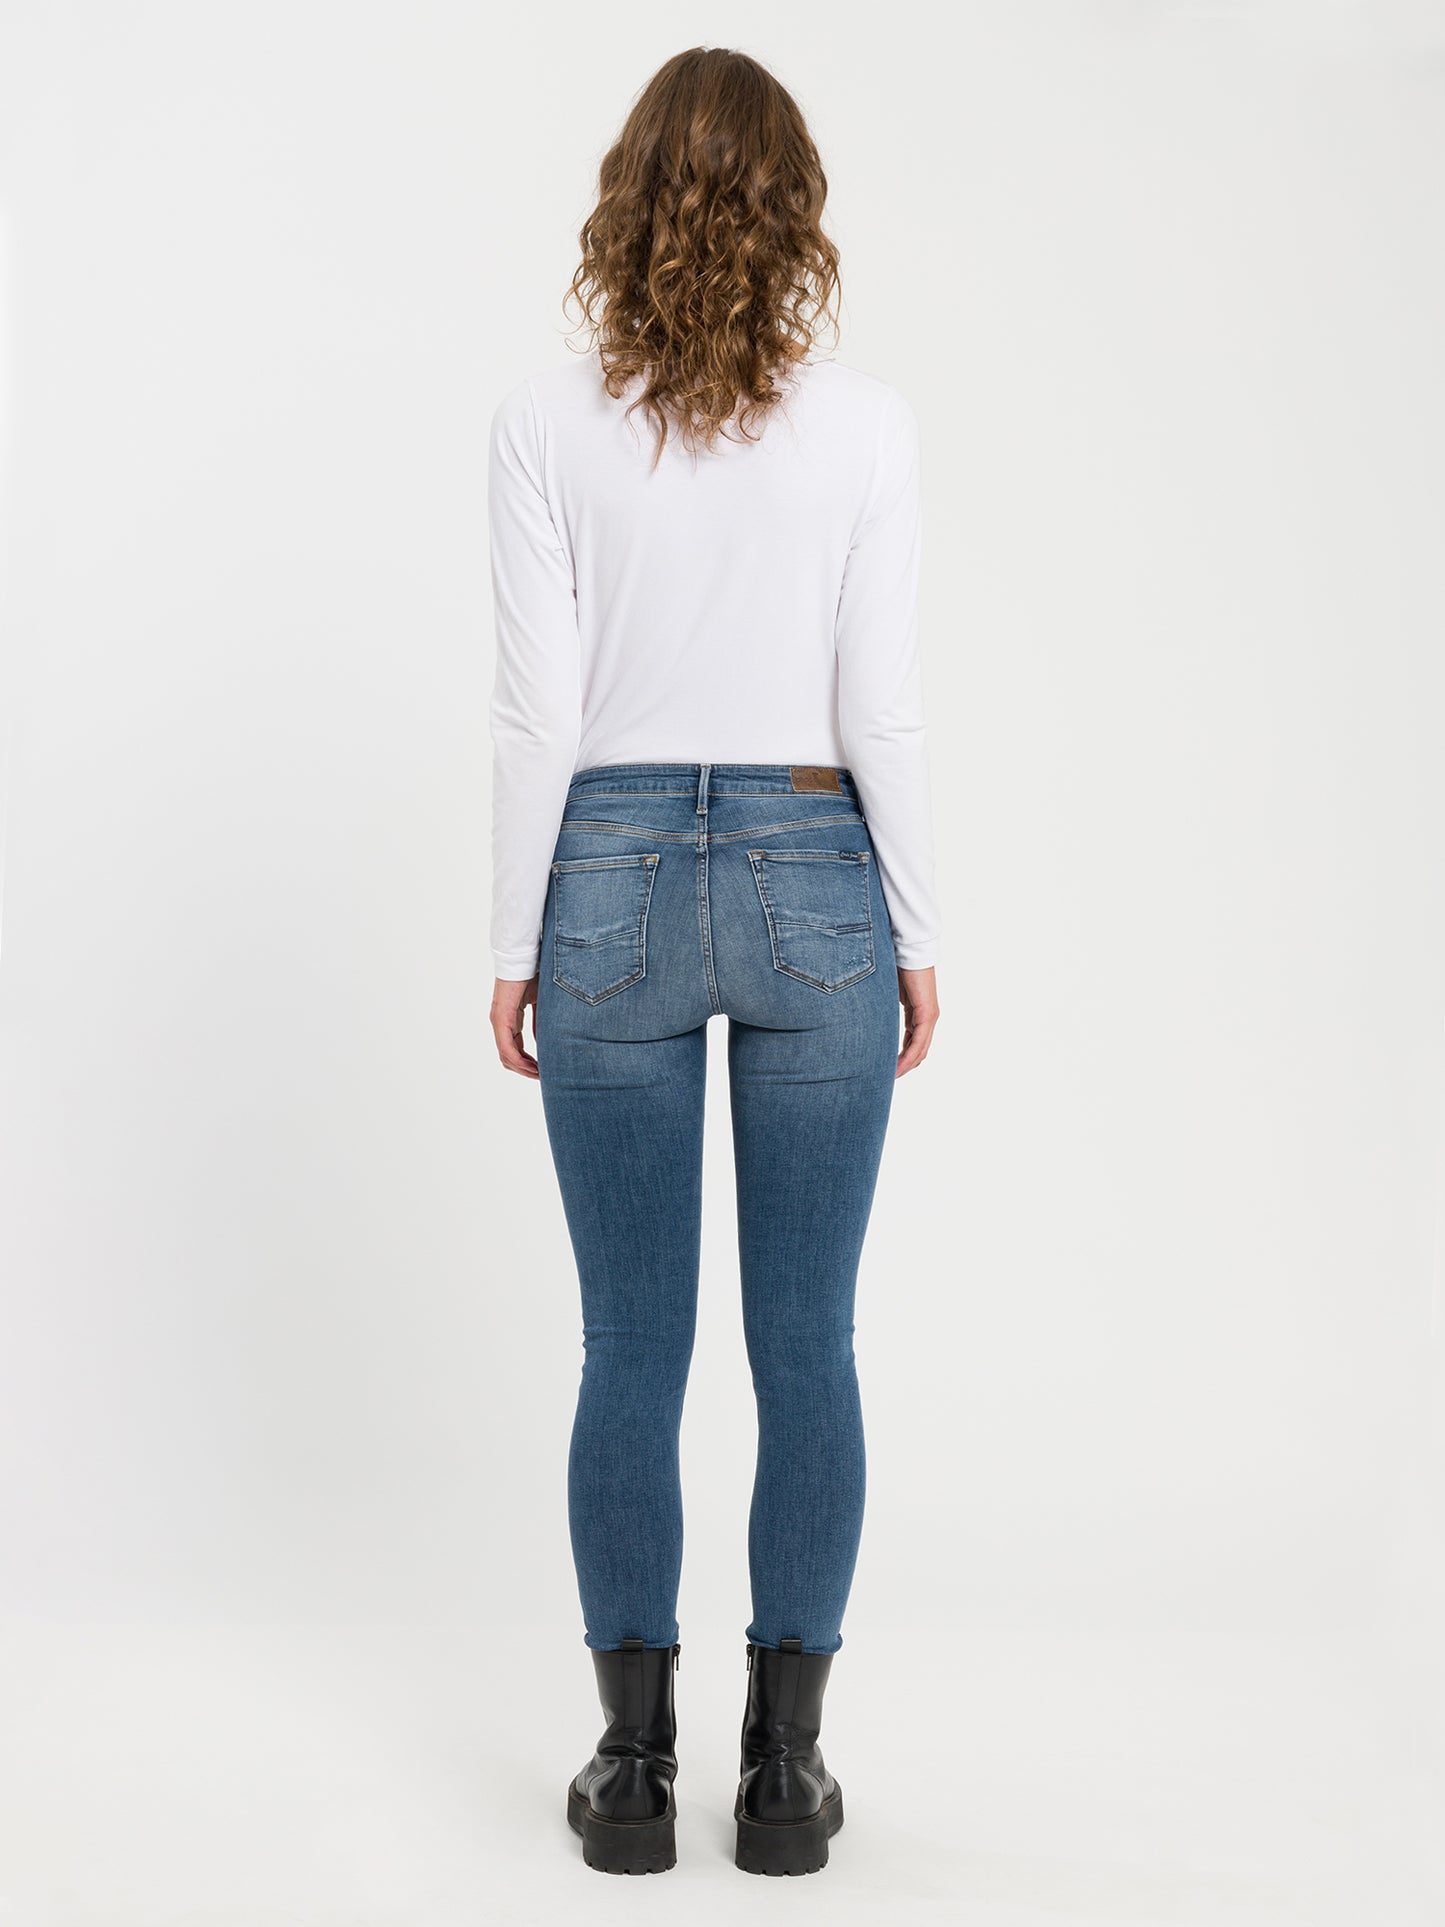 Alan women's jeans skinny fit high waist dark blue